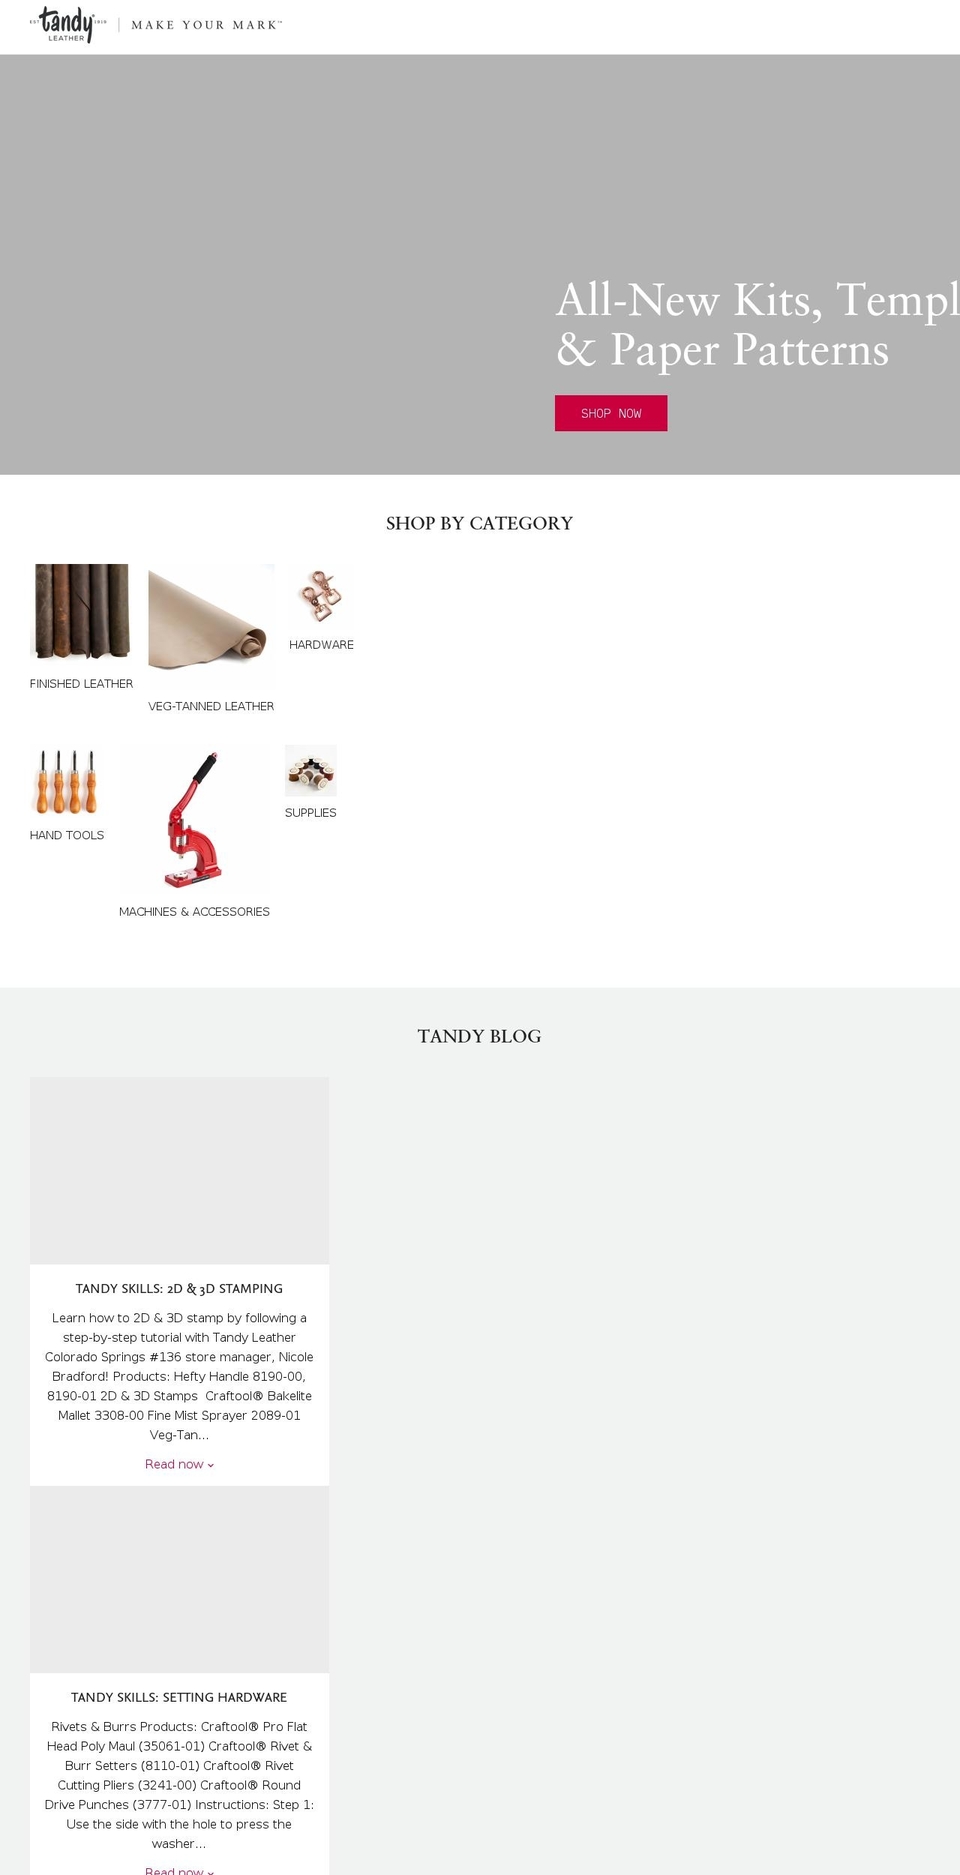 tandyleatherfactory.co.uk shopify website screenshot